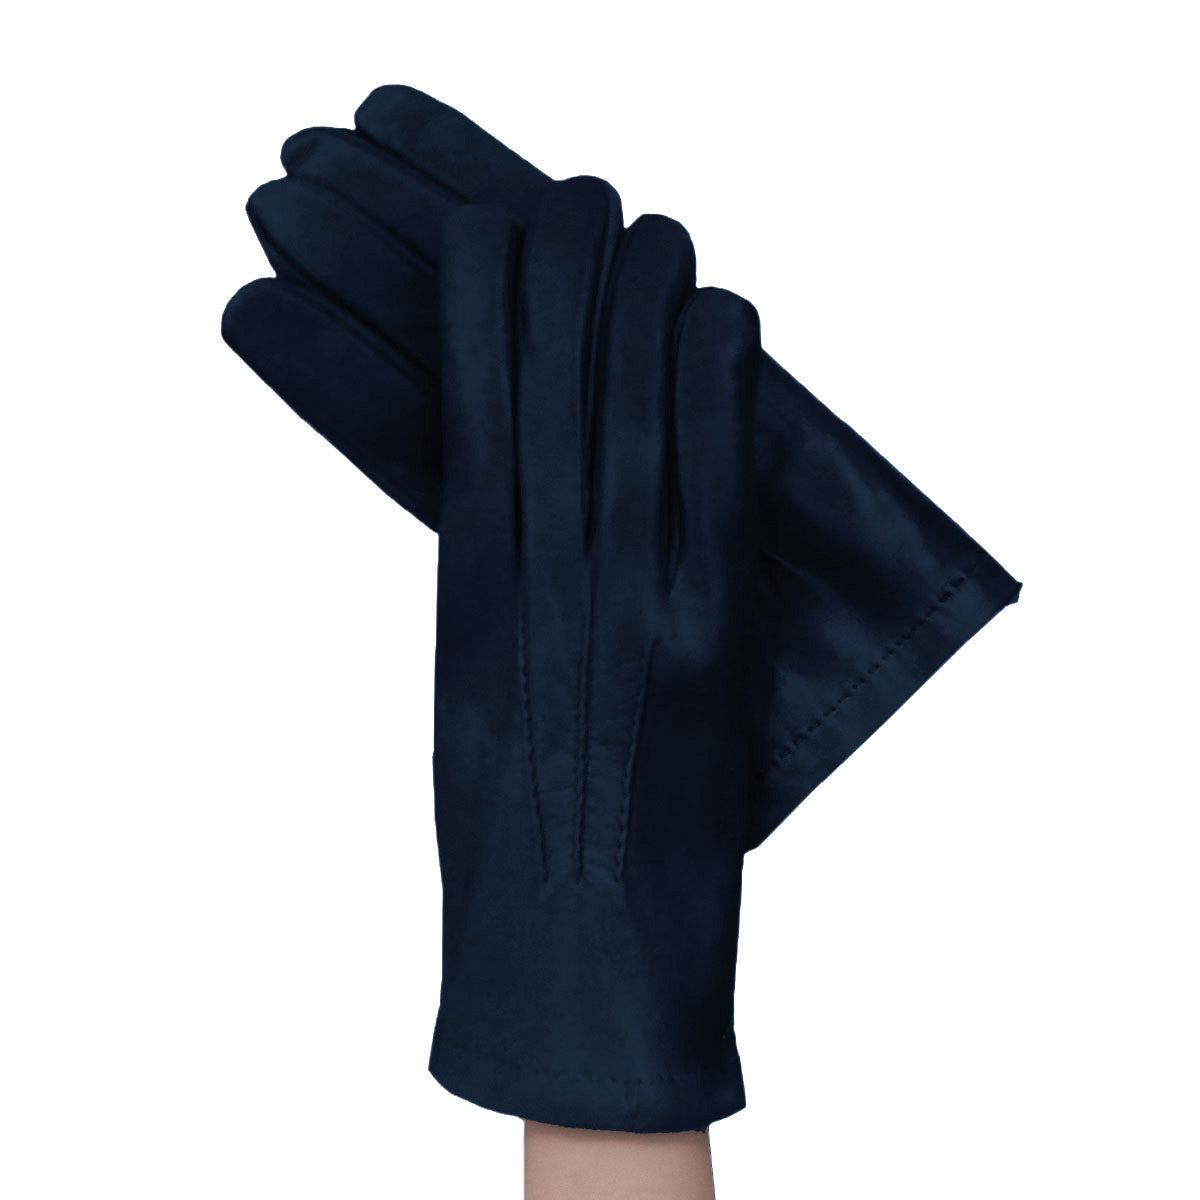 Men's Navy Blue Italian kidskin leather gloves lined in cashmere. - Solo Classe